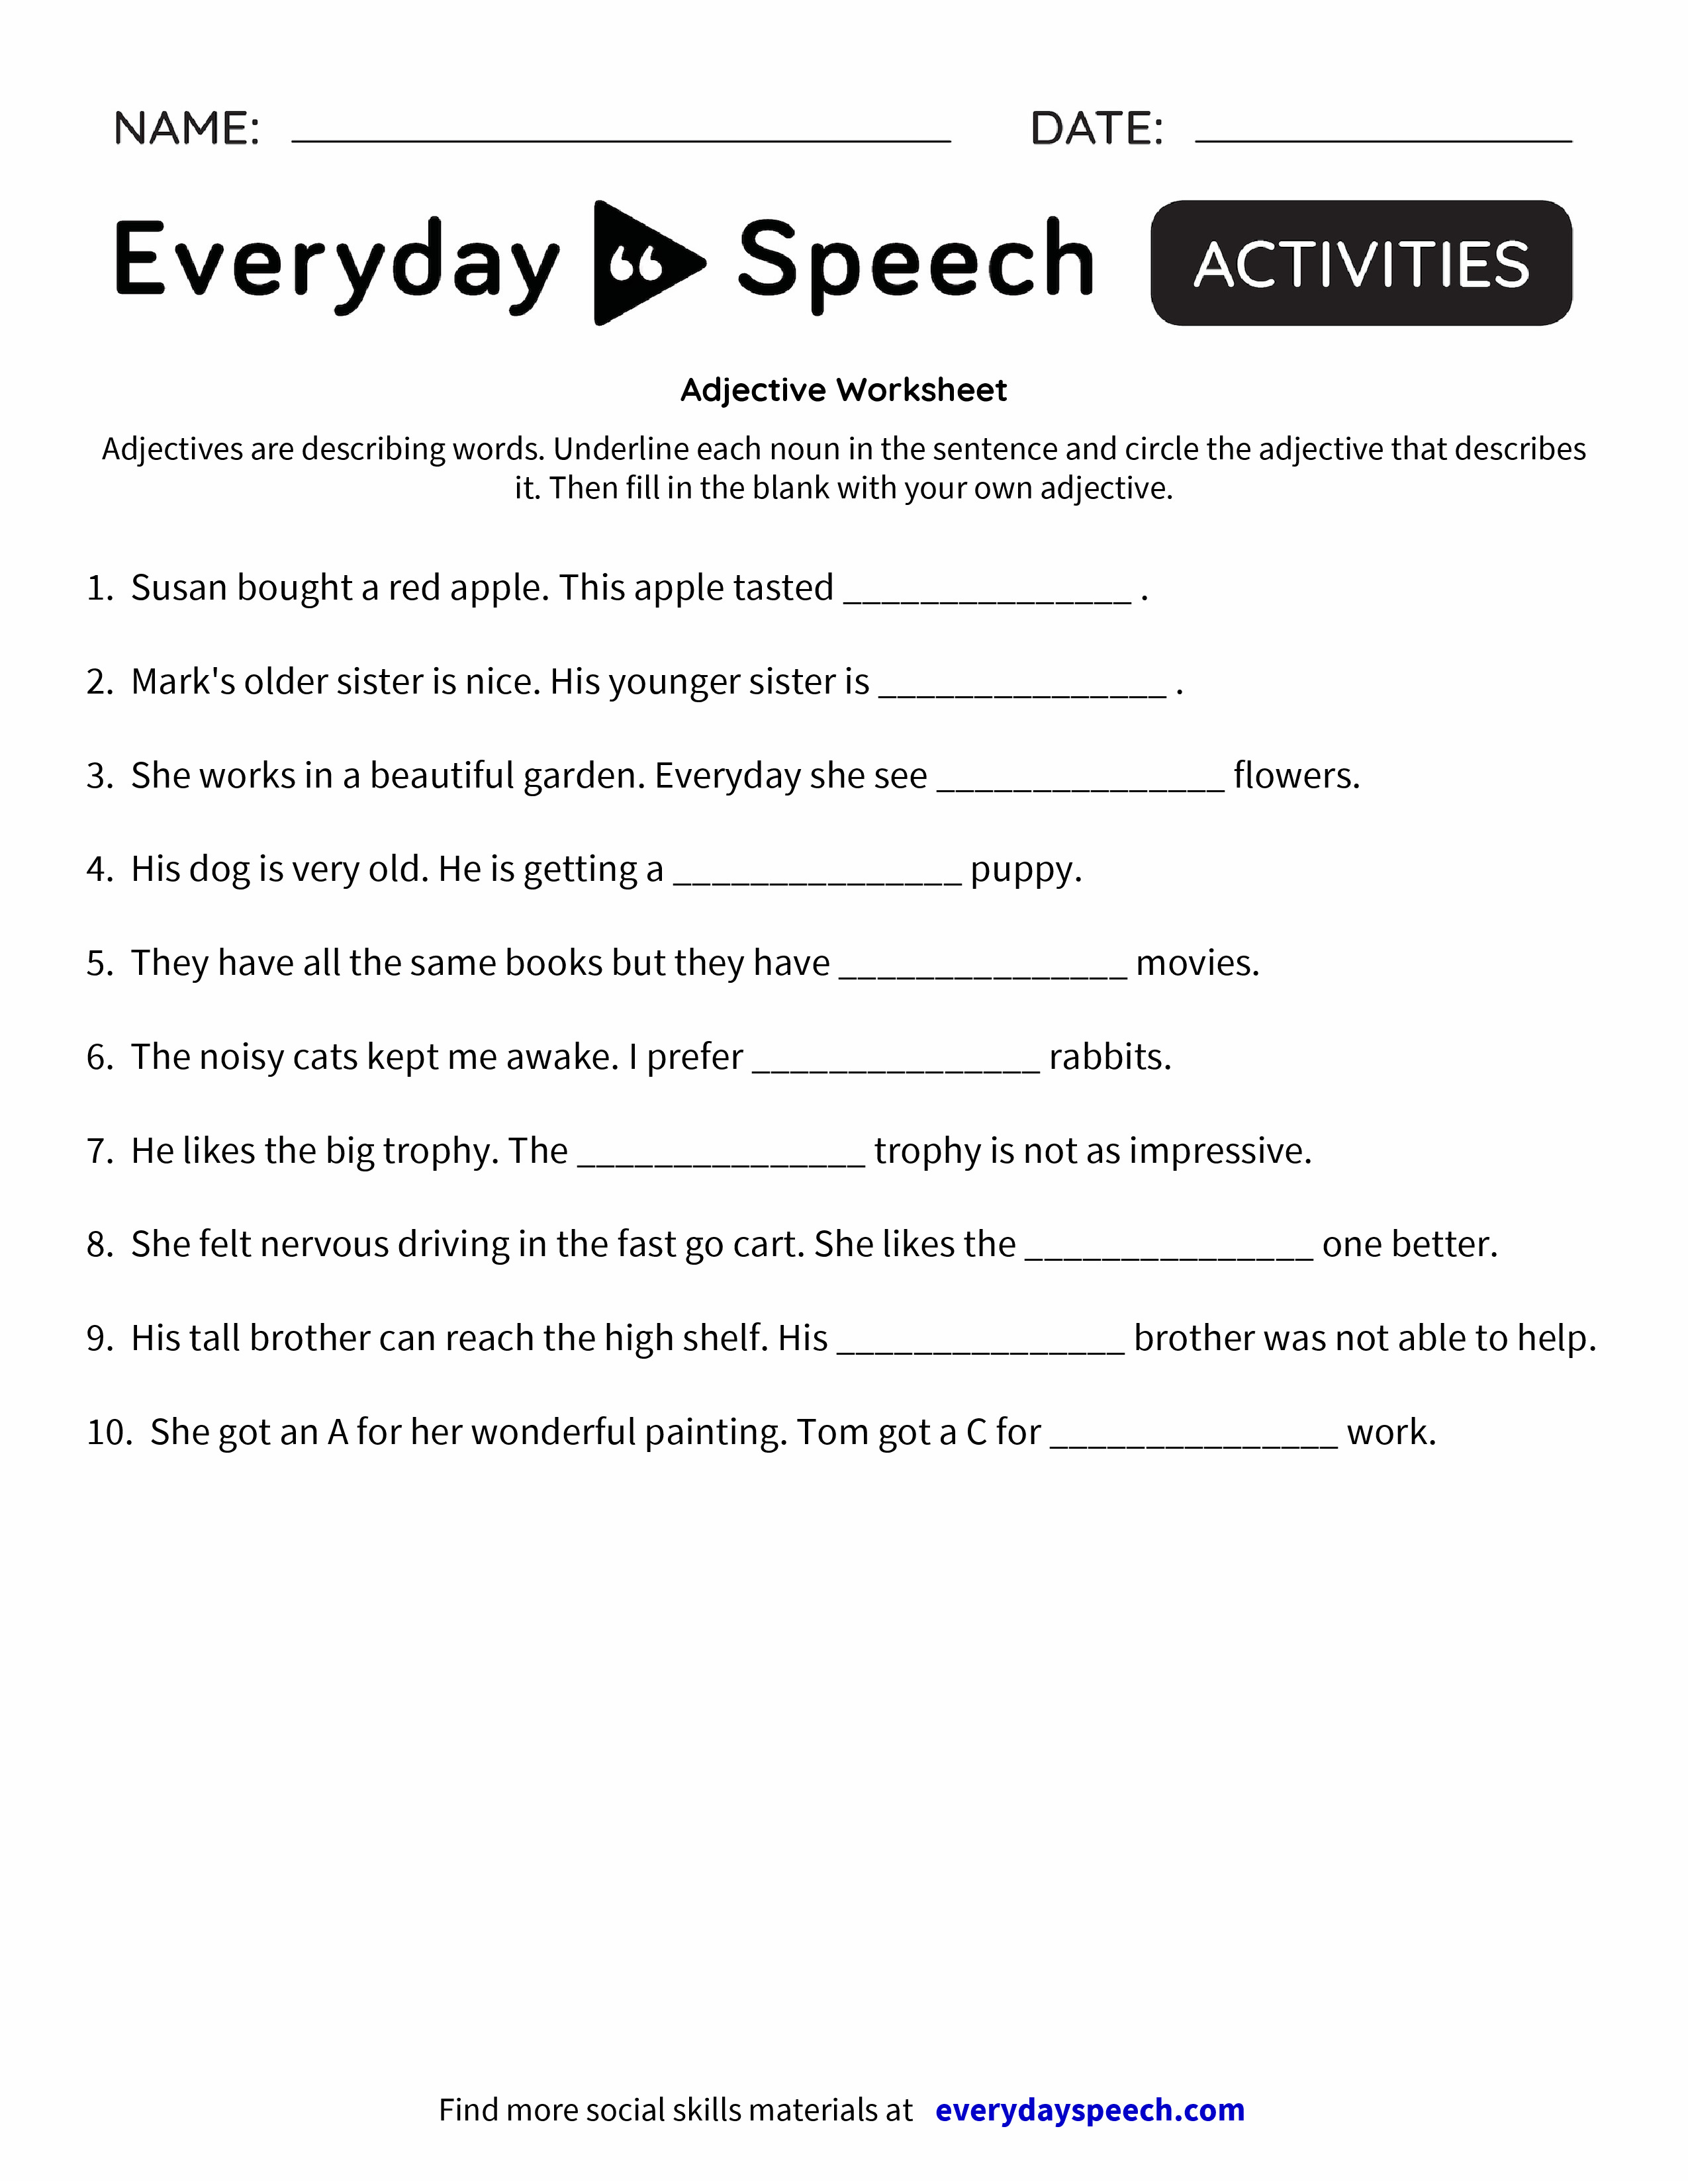 adjective-worksheet-everyday-speech-everyday-speech